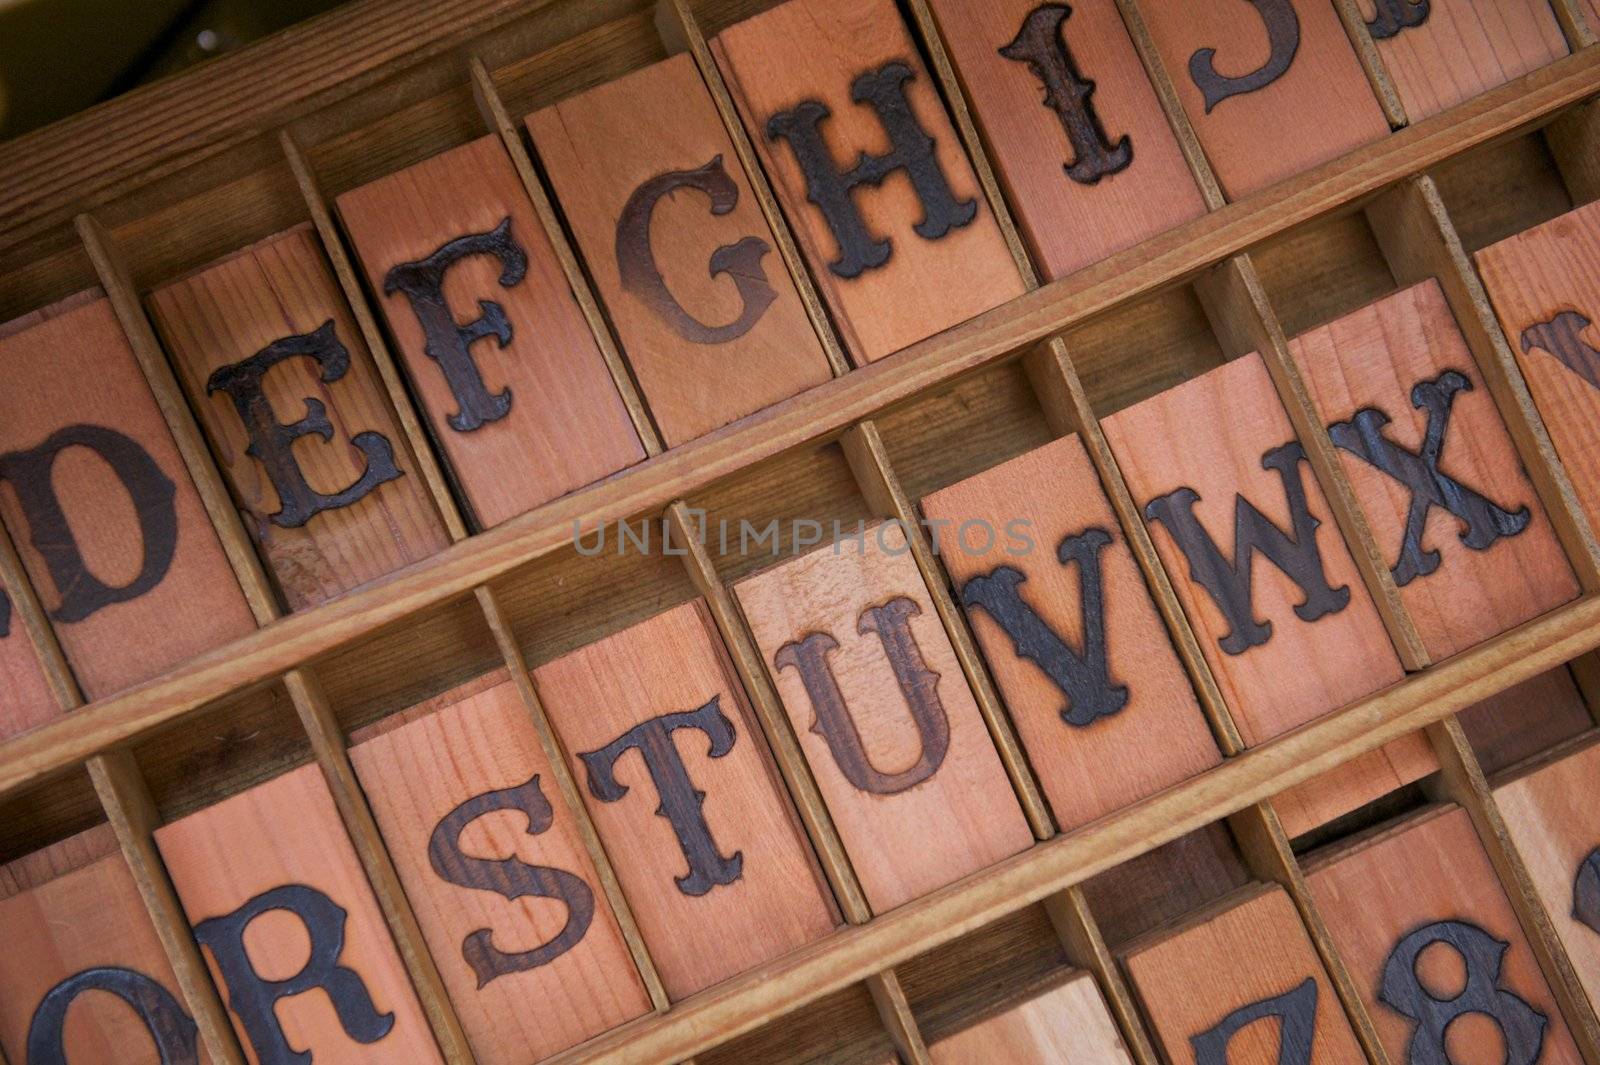 Redwood Letter Blocks by pixelsnap